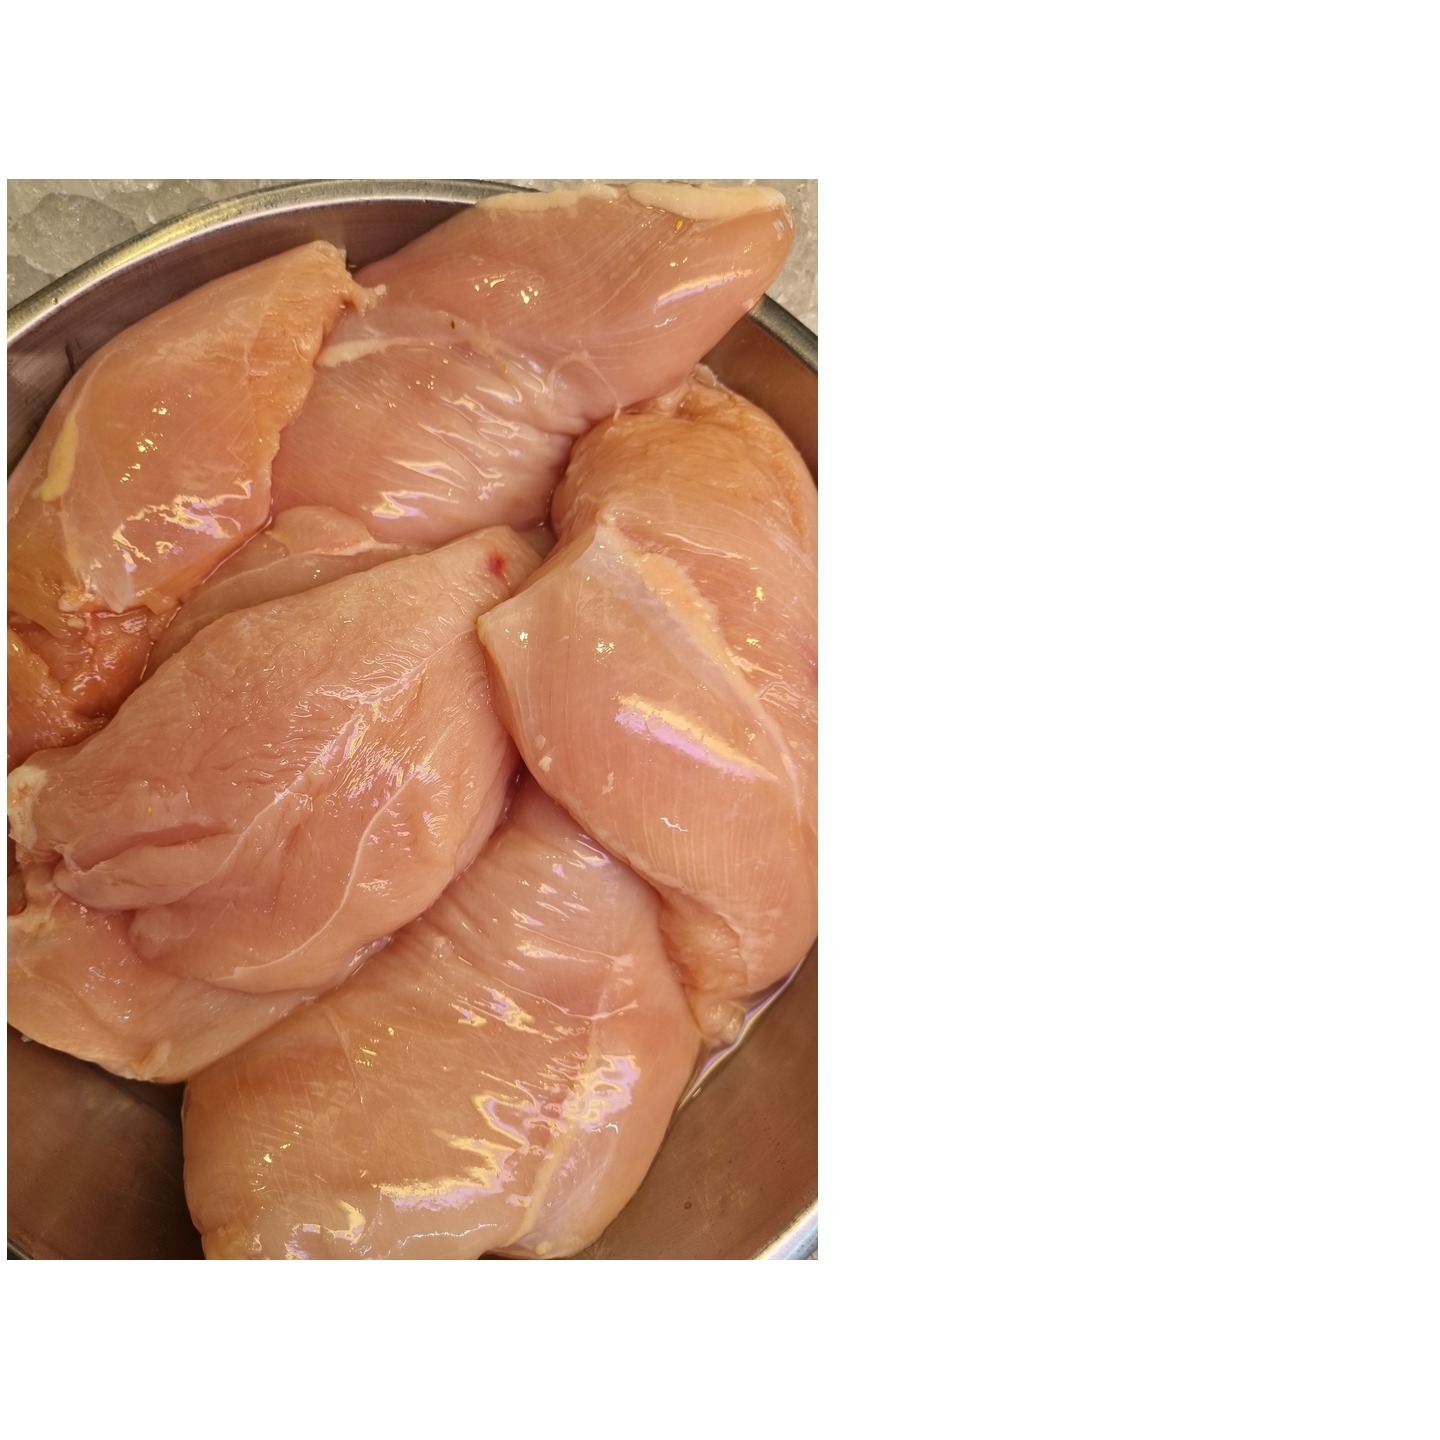 Skinless Boneless Chicken Breast